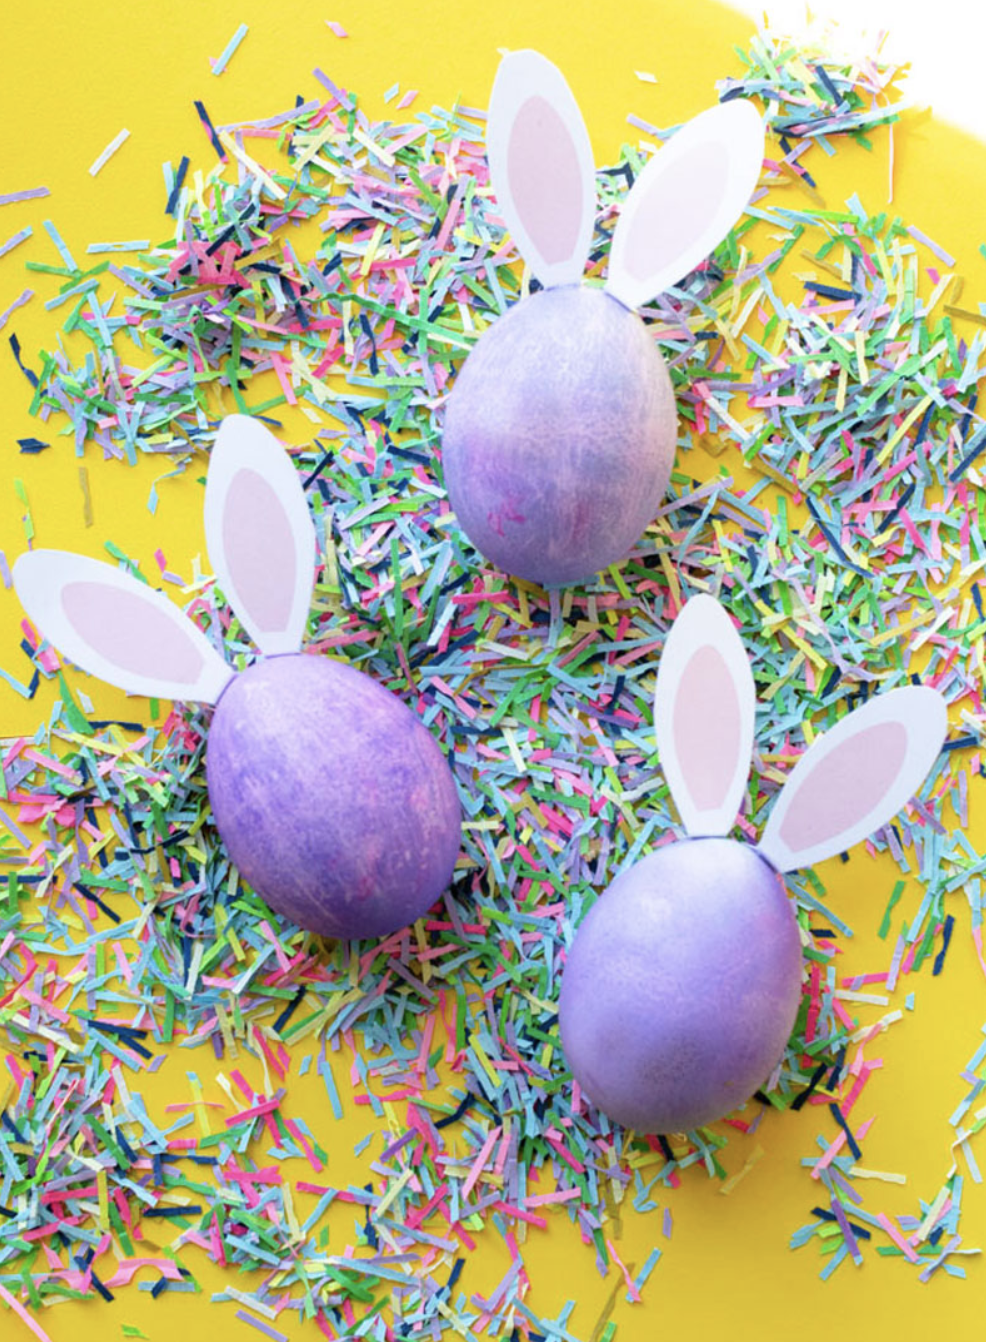 Color-Changing Soft Translucent Rubber Egg for Kids Easter Play 